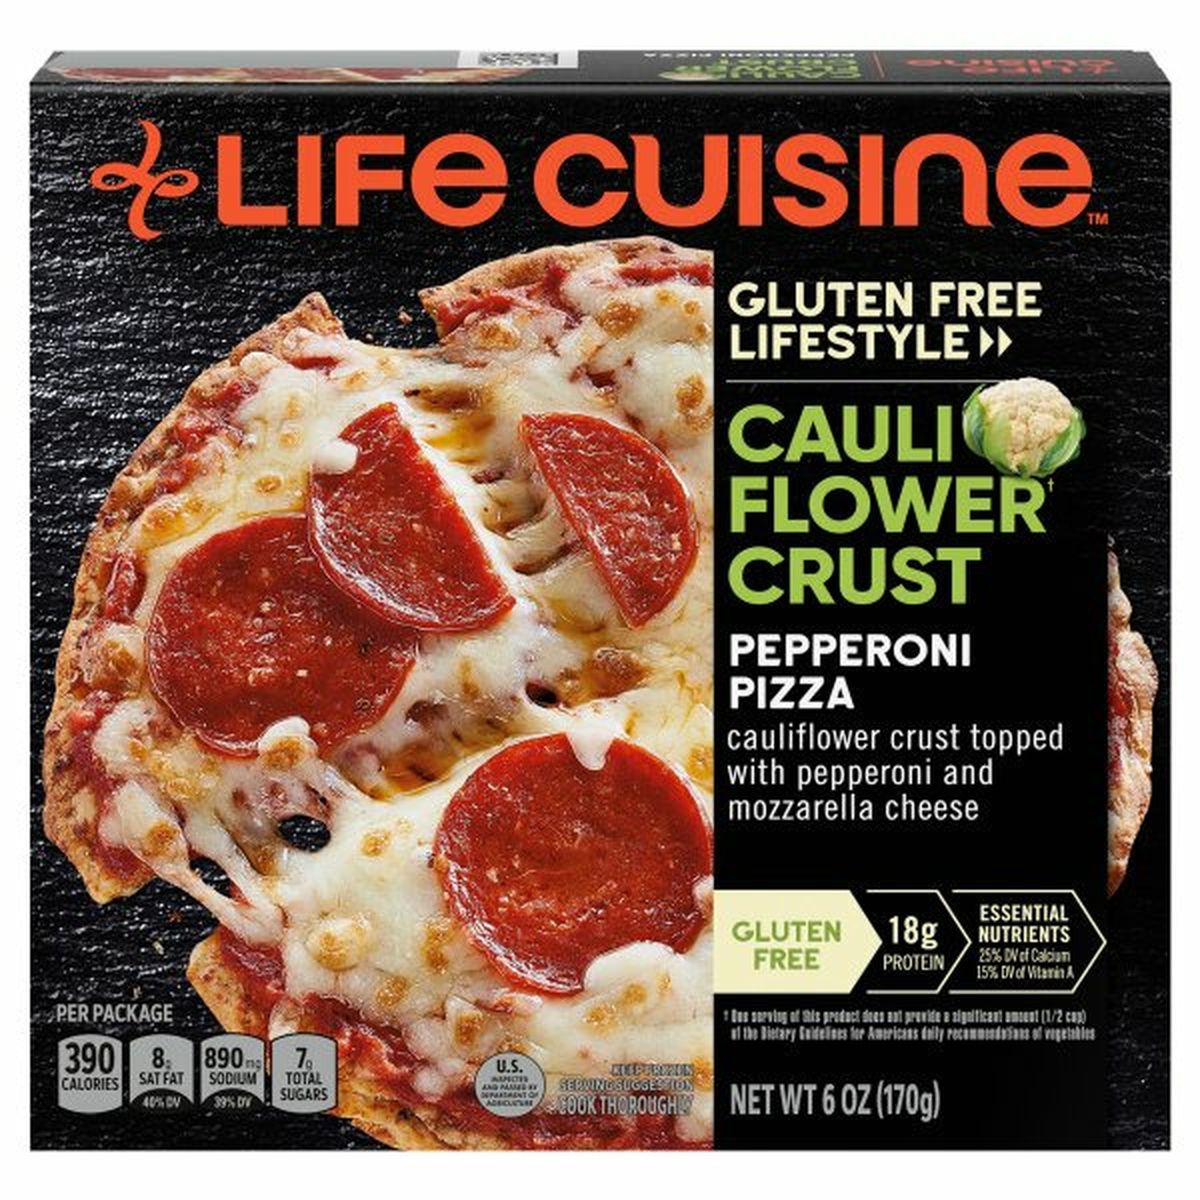 Calories in Life Cuisine Pizza, Cauliflower Crust, Pepperoni, Gluten Free Lifestyle